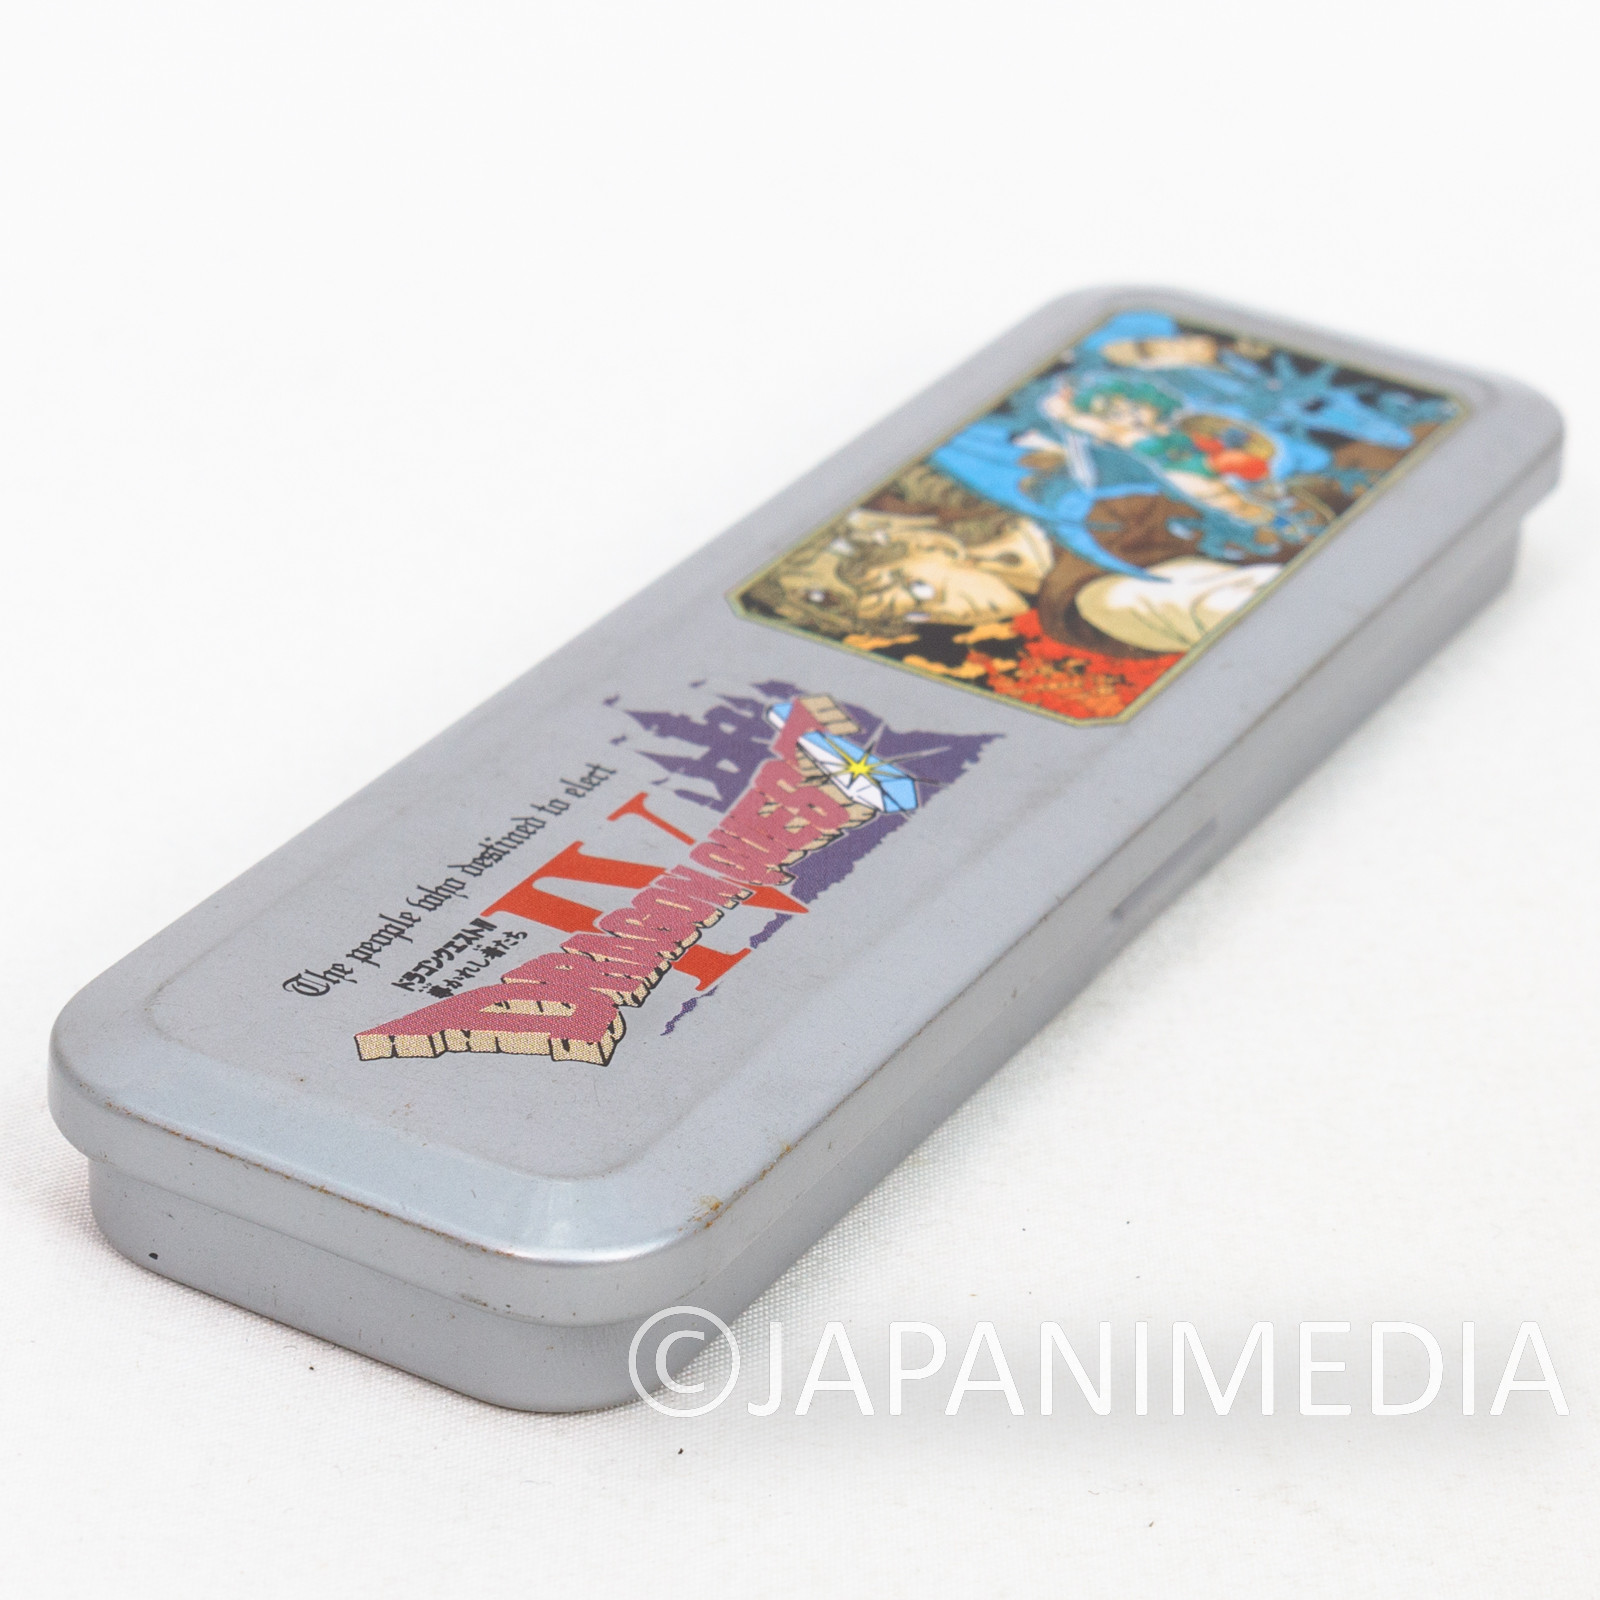 Retro RARE Dragon Quest 4 Mini Stationery set Enix 1991 [Pen Case / Pencil / Ruler ] JAPAN GAME NES